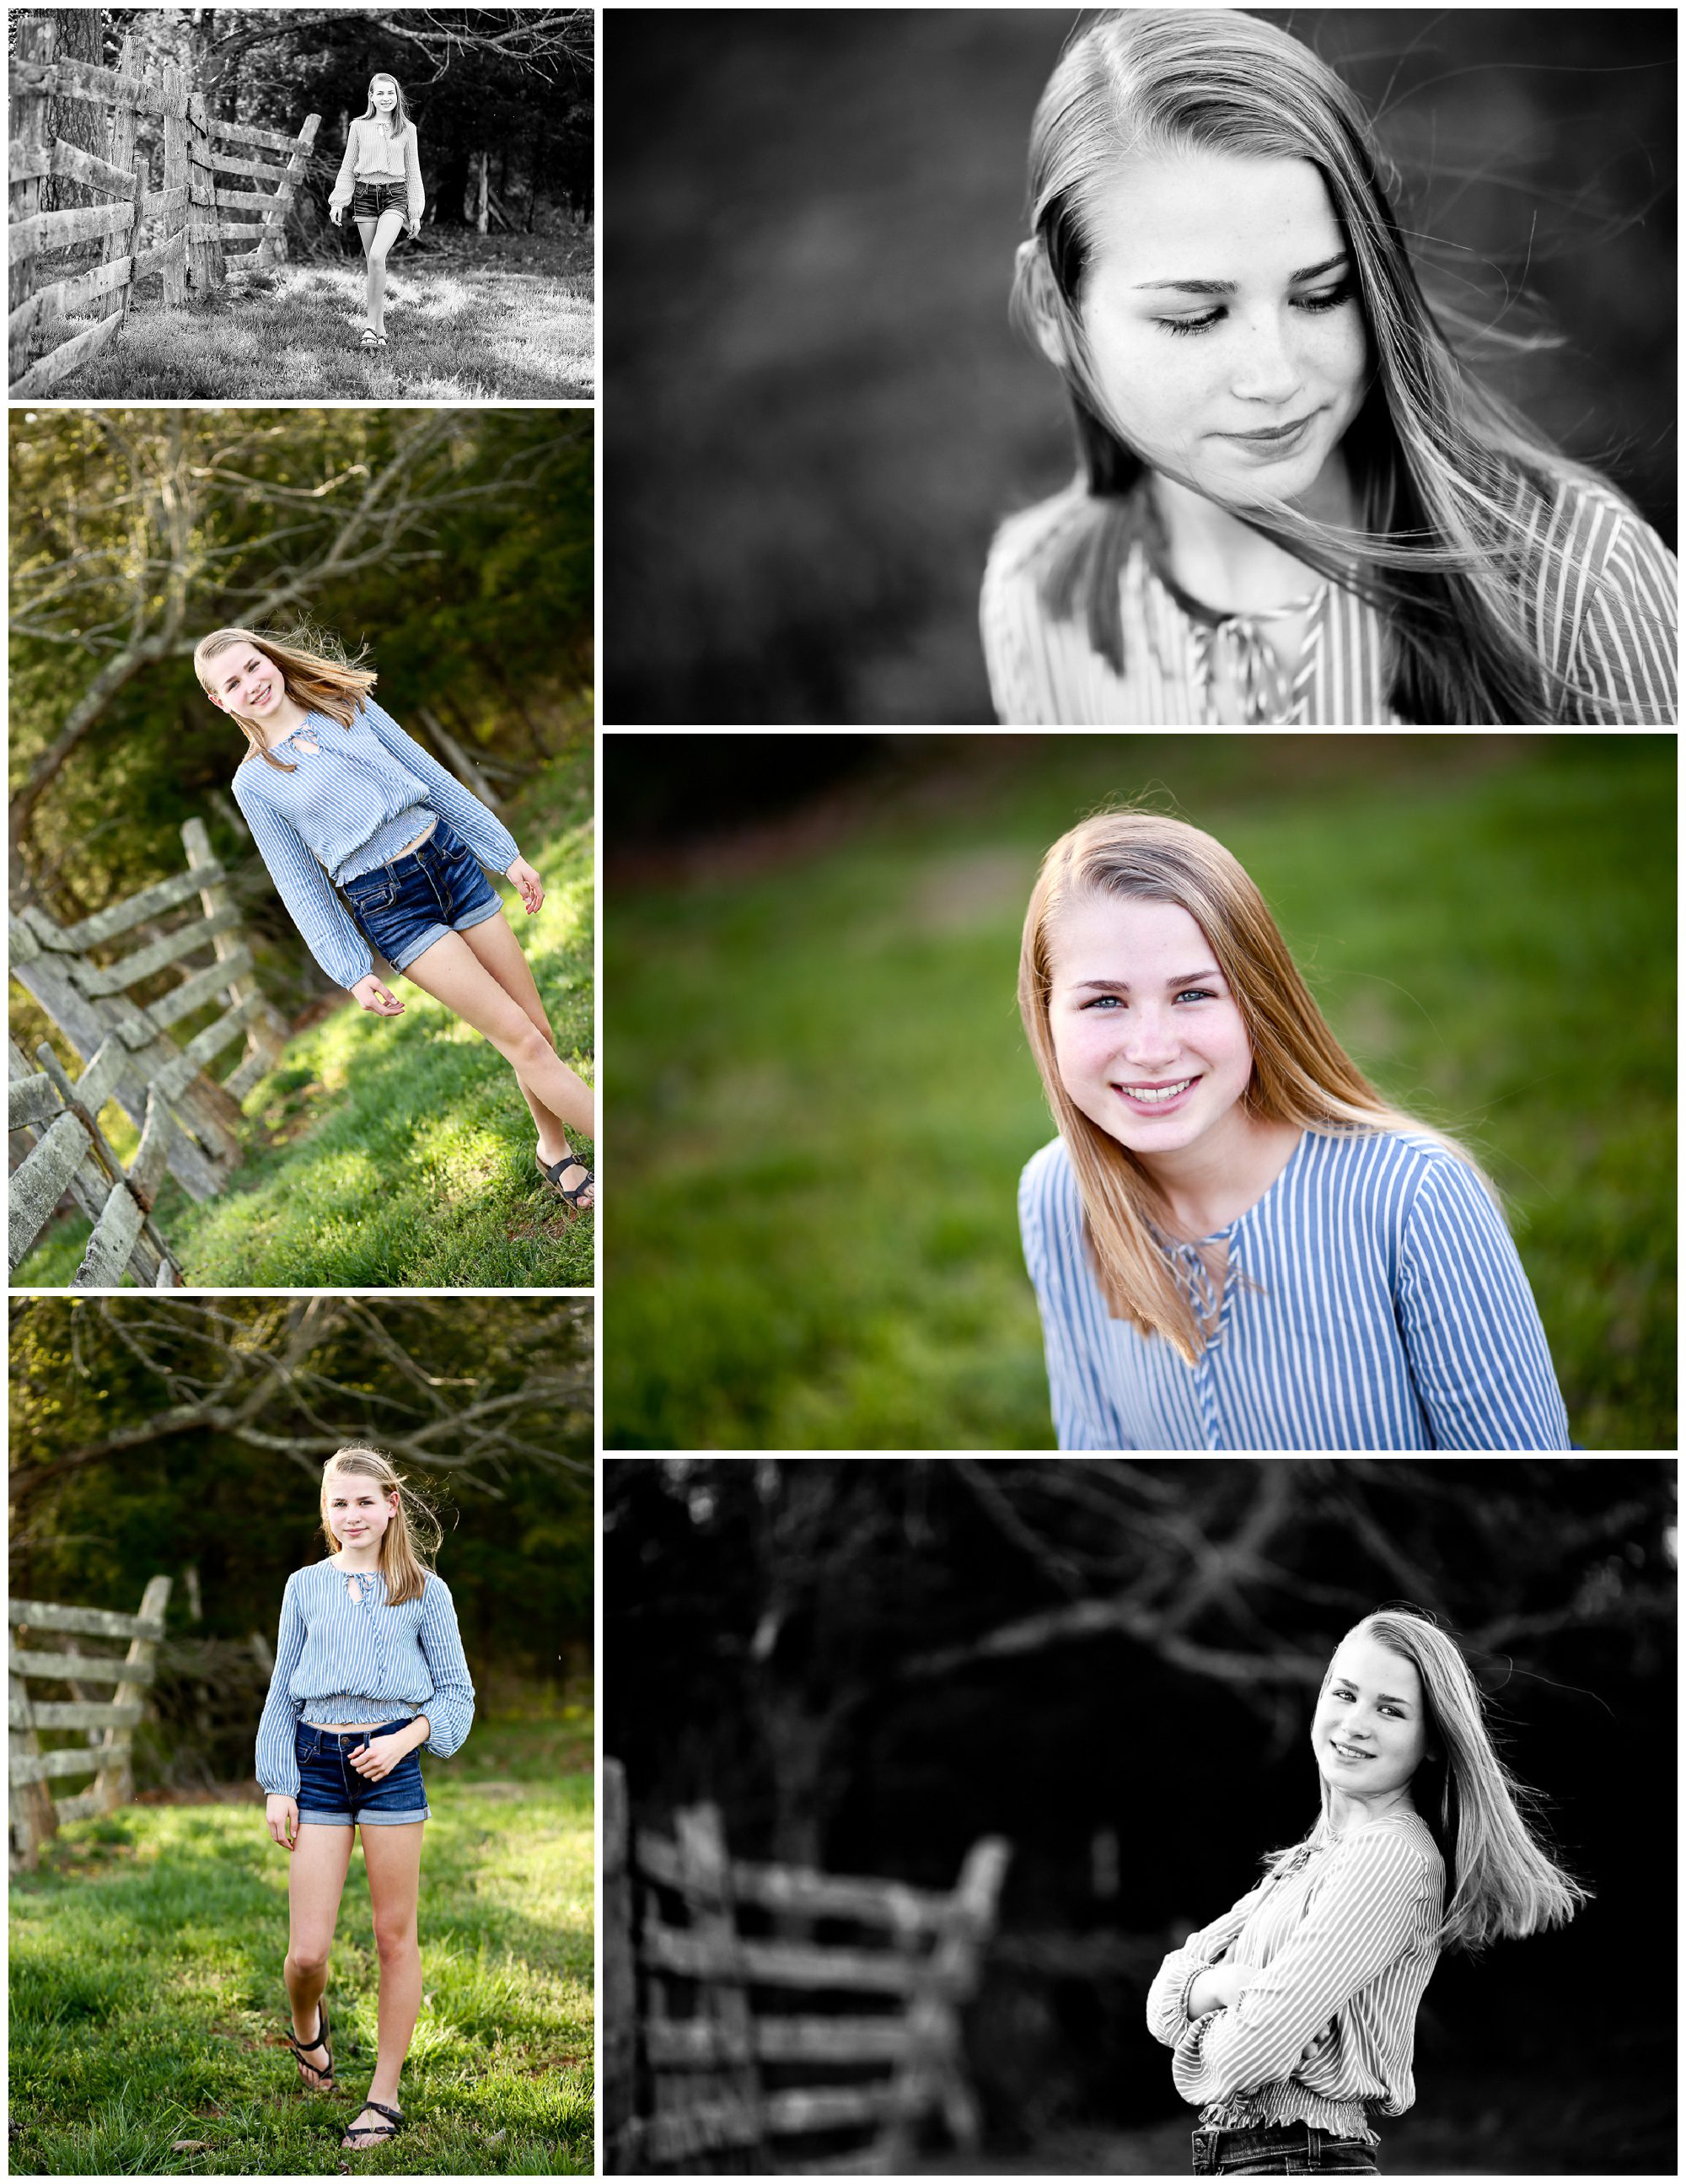 Lake Monticello Teenage Girl Spring Portraits Fluvanna Photographer Coronacation Pictures springtime photoshoot session 2020 senior high school break